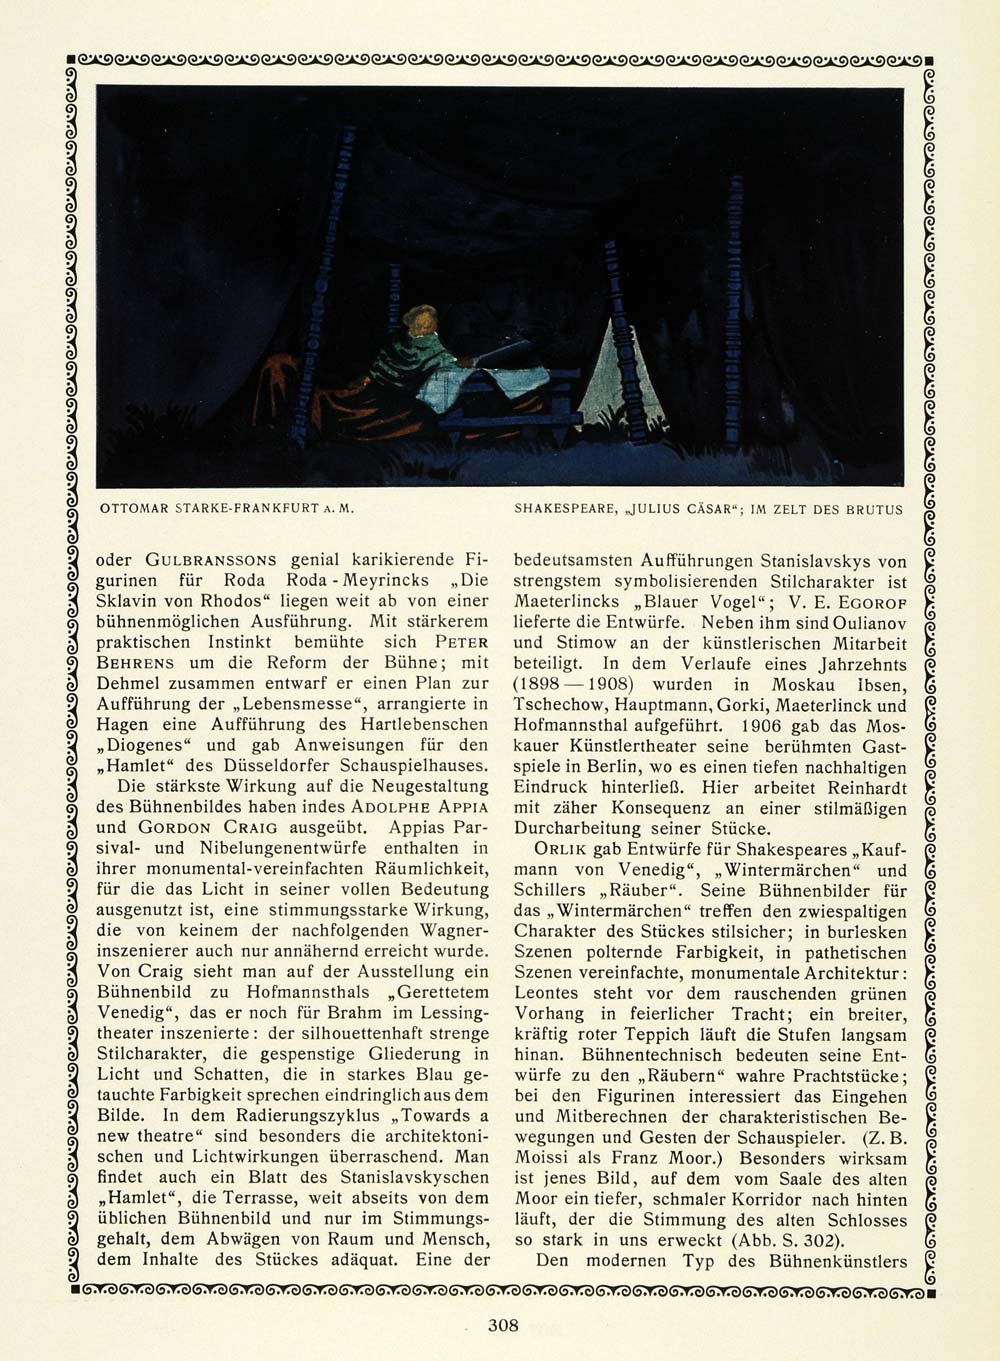 1913 Print Brutus Tent Painting Night Fall Shakespeare Play Julius Caesar DKU1